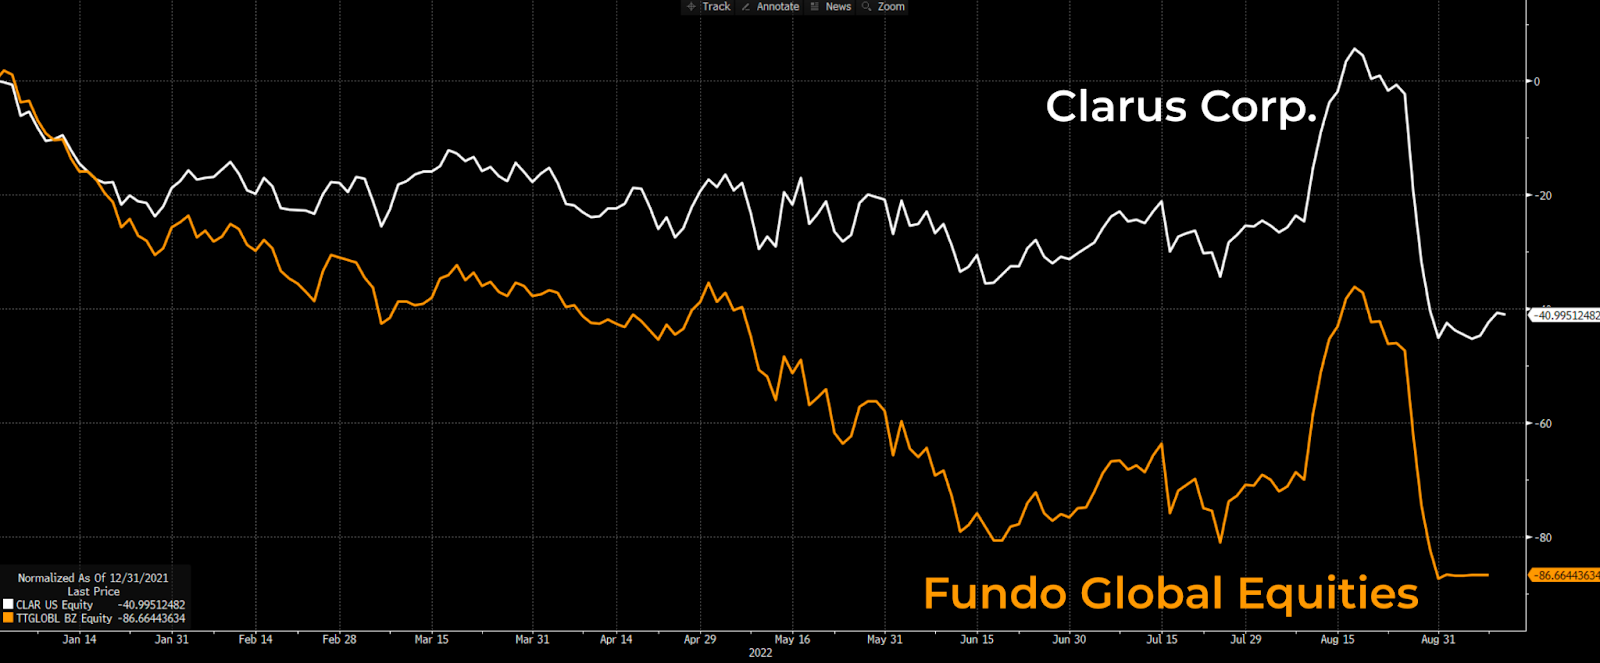 Desempenho de Clarus Corp. e Fundo Global Equities.